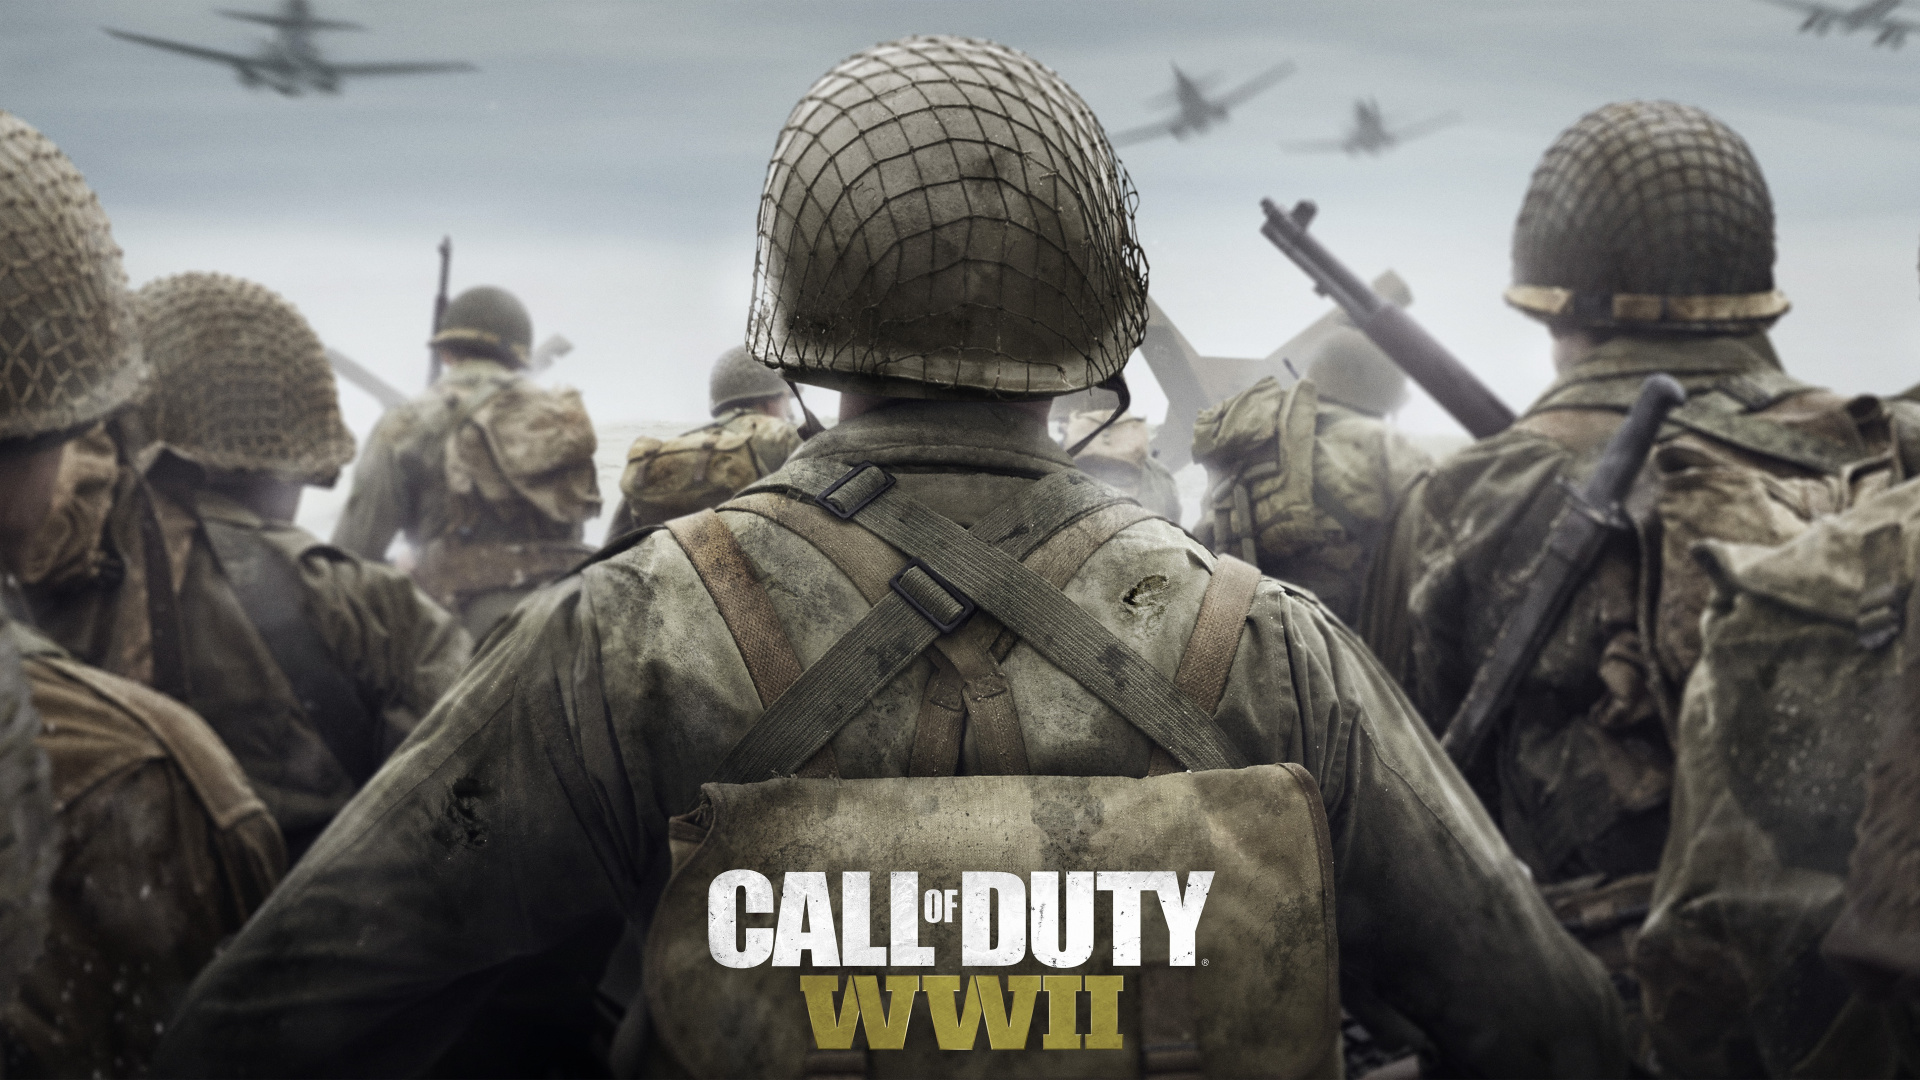 Call of Duty Ww2, Call of Duty de la Seconde GUERRE Mondiale, Activision, Sledgehammer Games, Soldat. Wallpaper in 1920x1080 Resolution